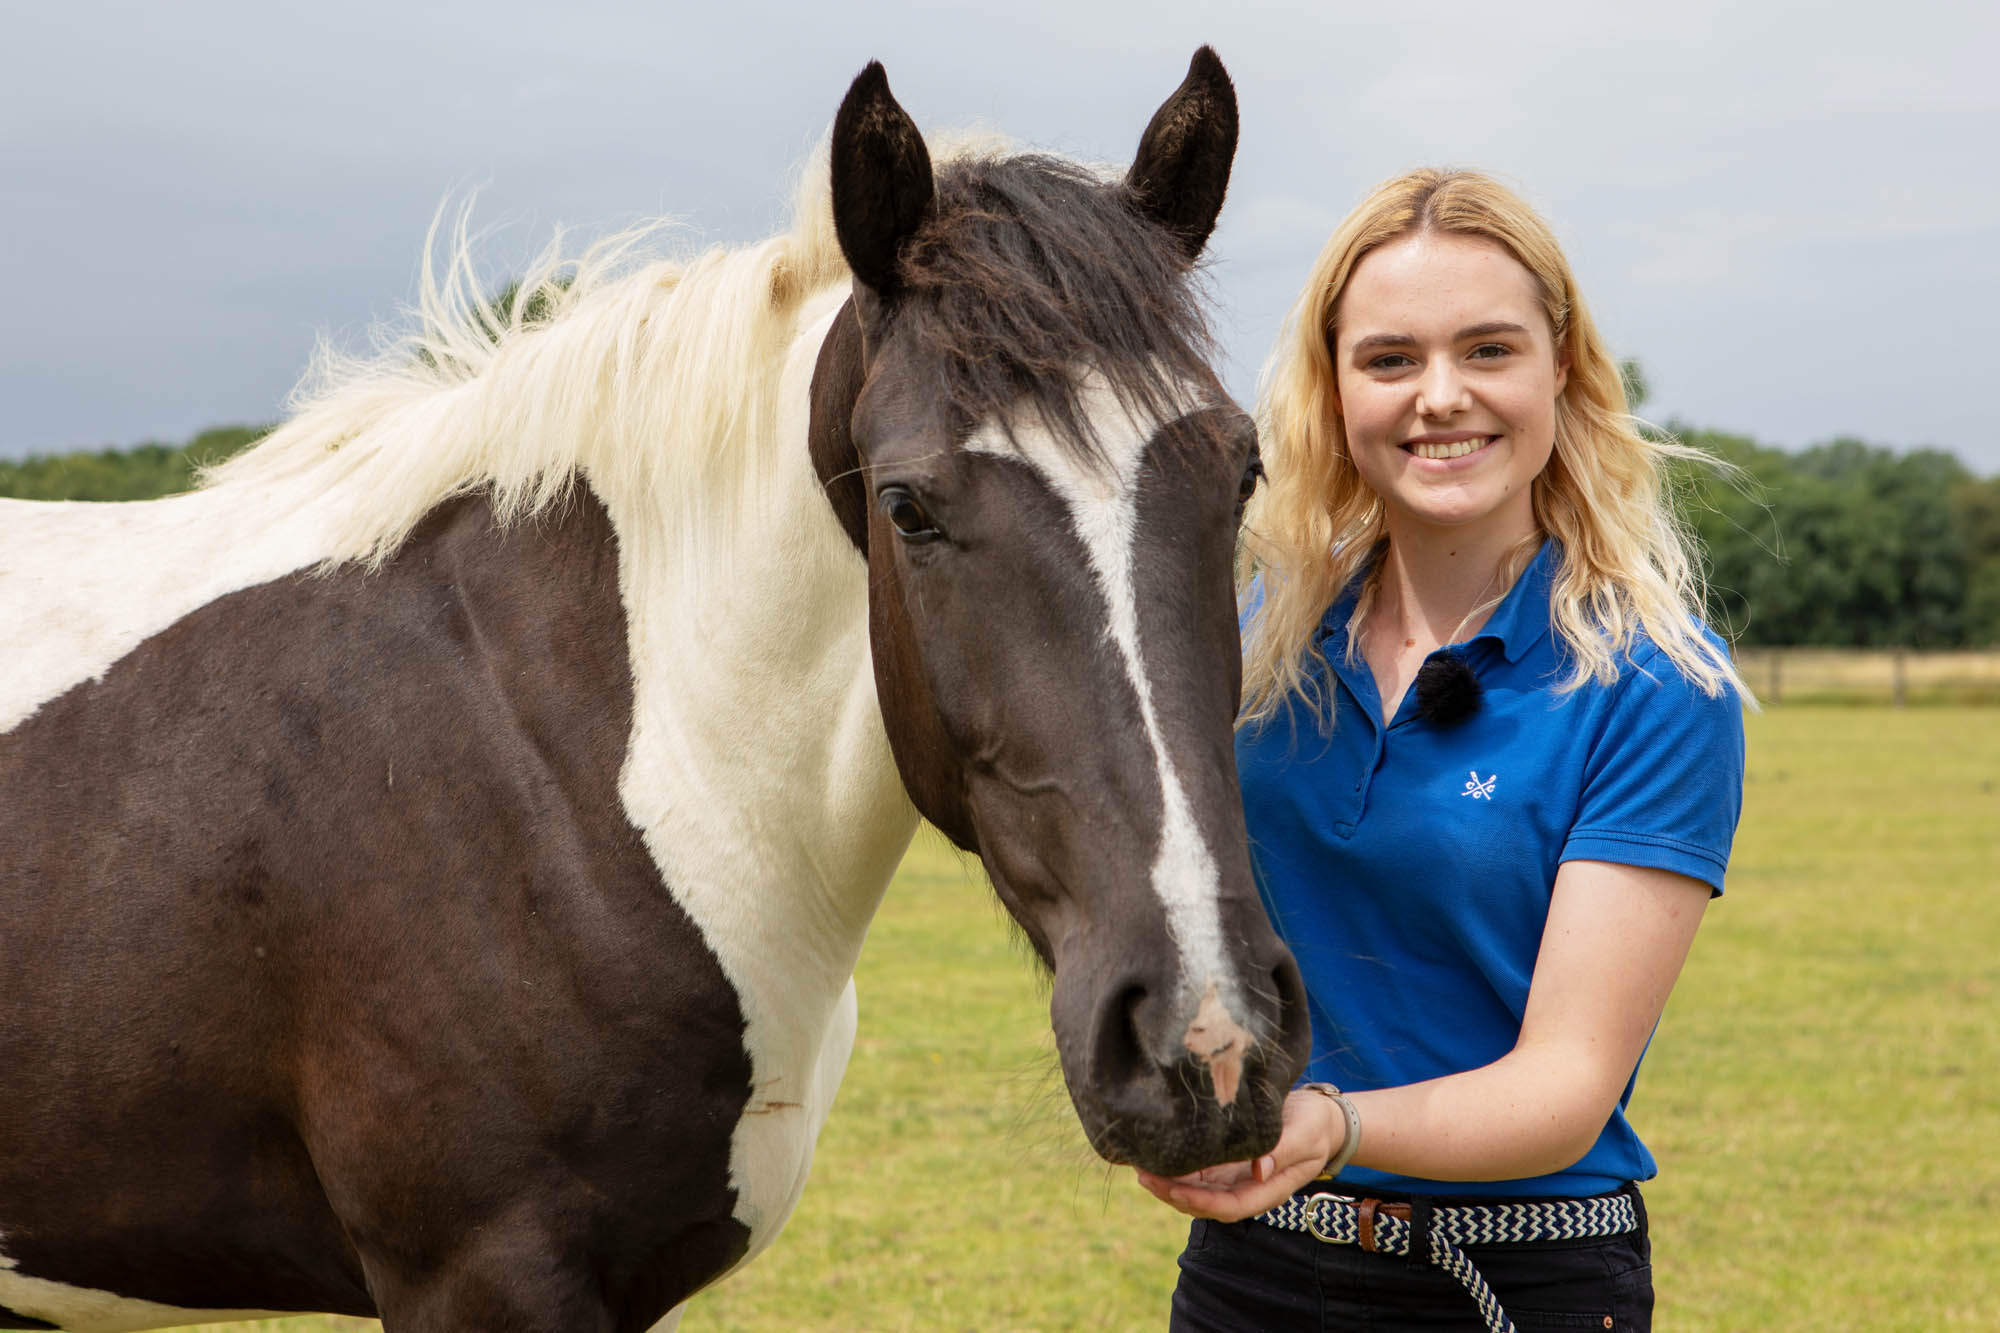 YouTube star This Esme visits World Horse Welfare